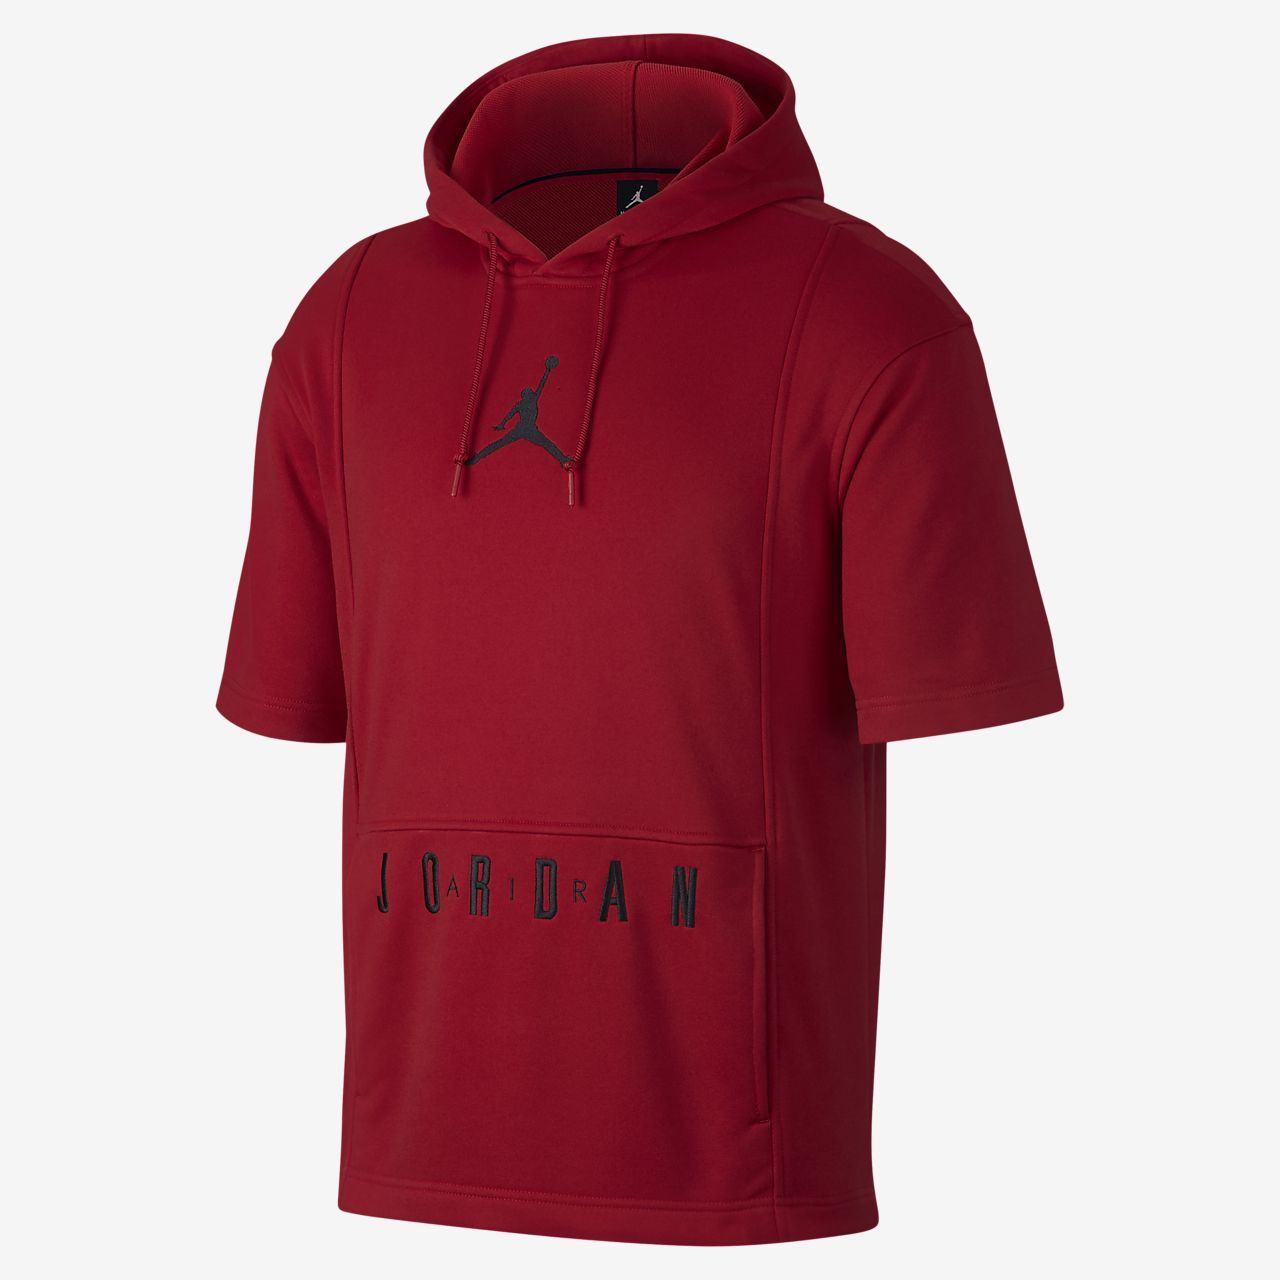 jordan hoodie shirt cheap online